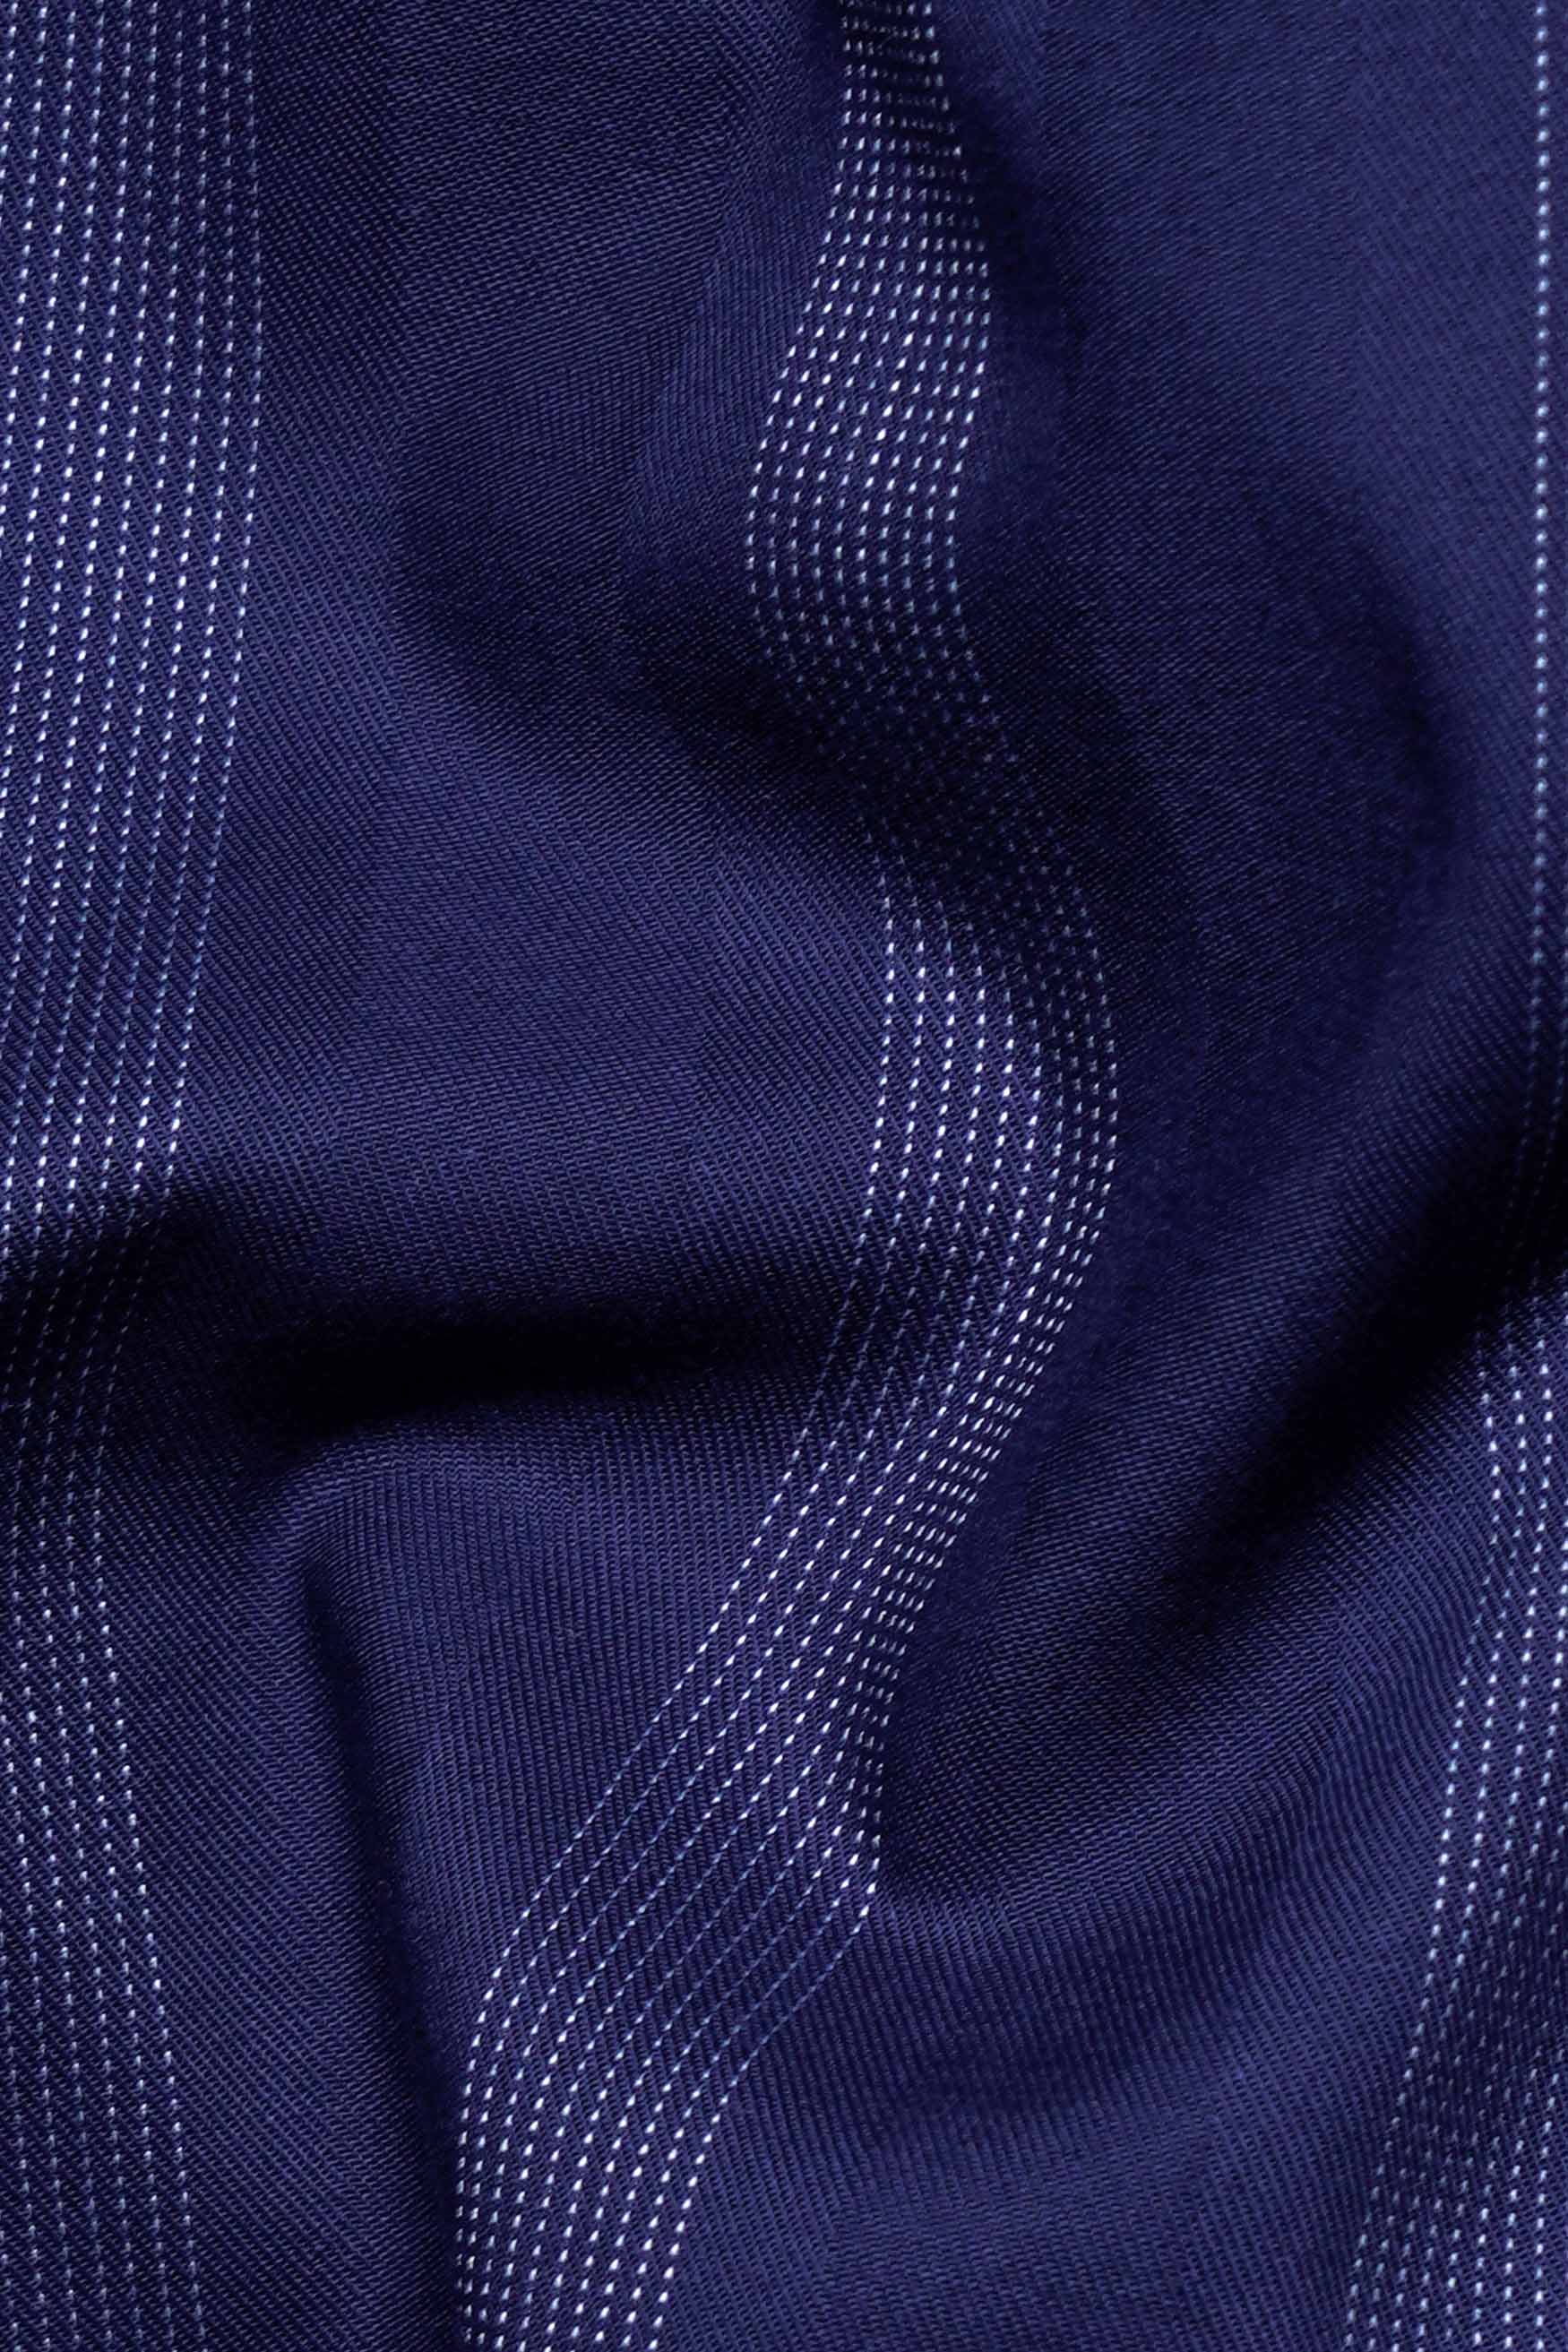 Haiti Blue and White Striped Dobby Textured Premium Giza Cotton Shirt 11600-M-38, 11600-M-H-38, 11600-M-39, 11600-M-H-39, 11600-M-40, 11600-M-H-40, 11600-M-42, 11600-M-H-42, 11600-M-44, 11600-M-H-44, 11600-M-46, 11600-M-H-46, 11600-M-48, 11600-M-H-48, 11600-M-50, 11600-M-H-50, 11600-M-52, 11600-M-H-52 